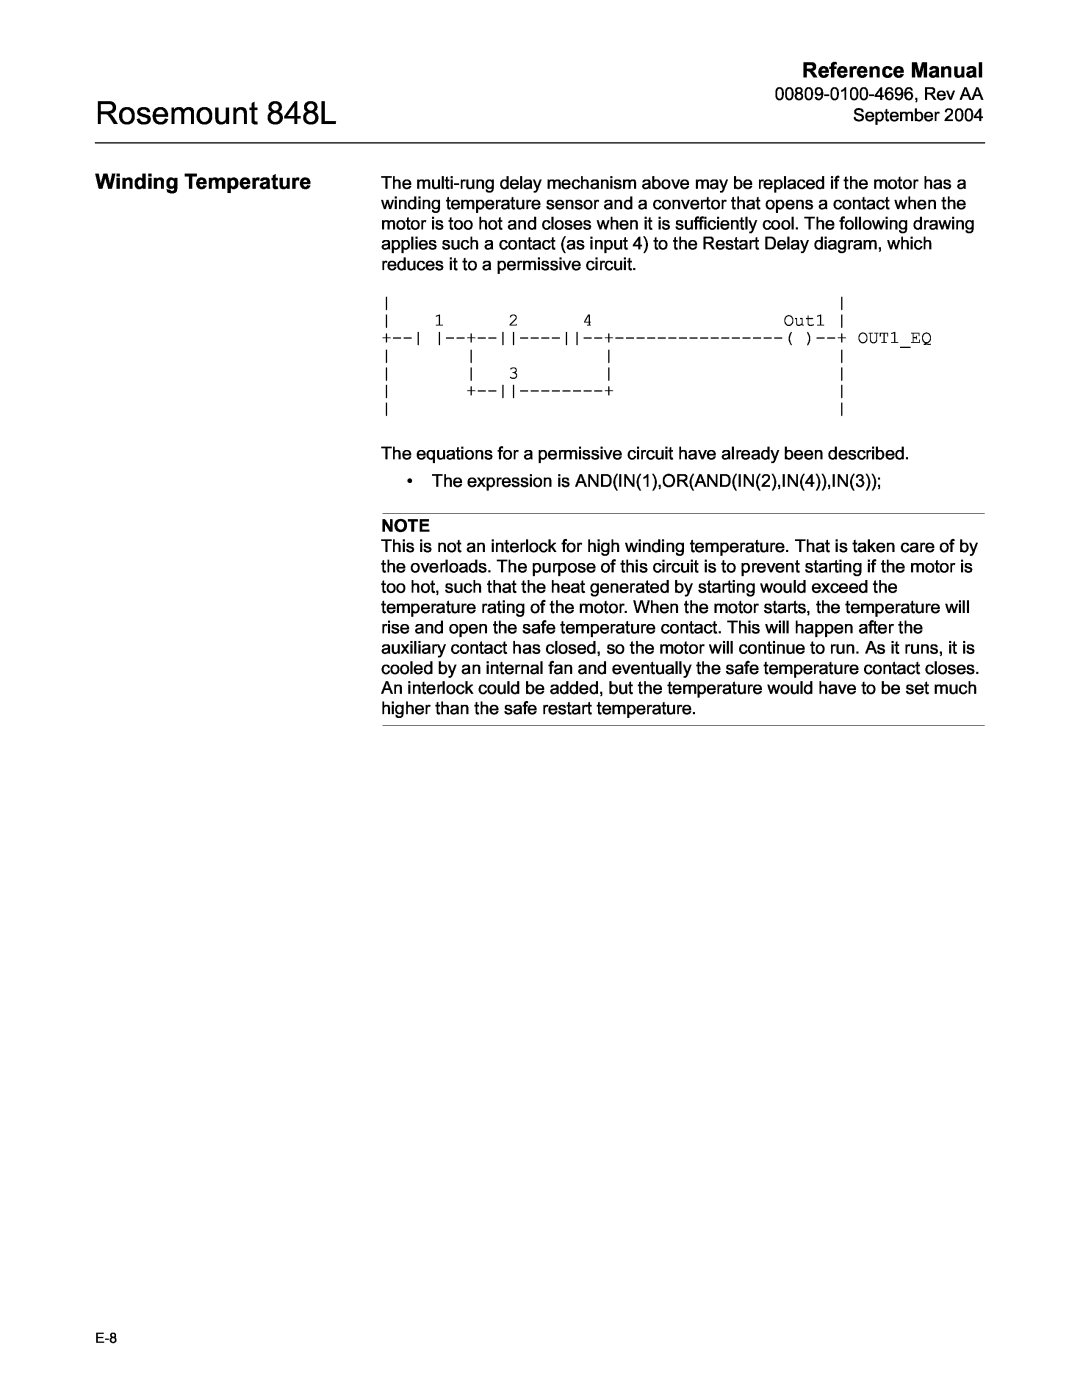 Emerson manual Winding Temperature, Rosemount 848L, Reference Manual 